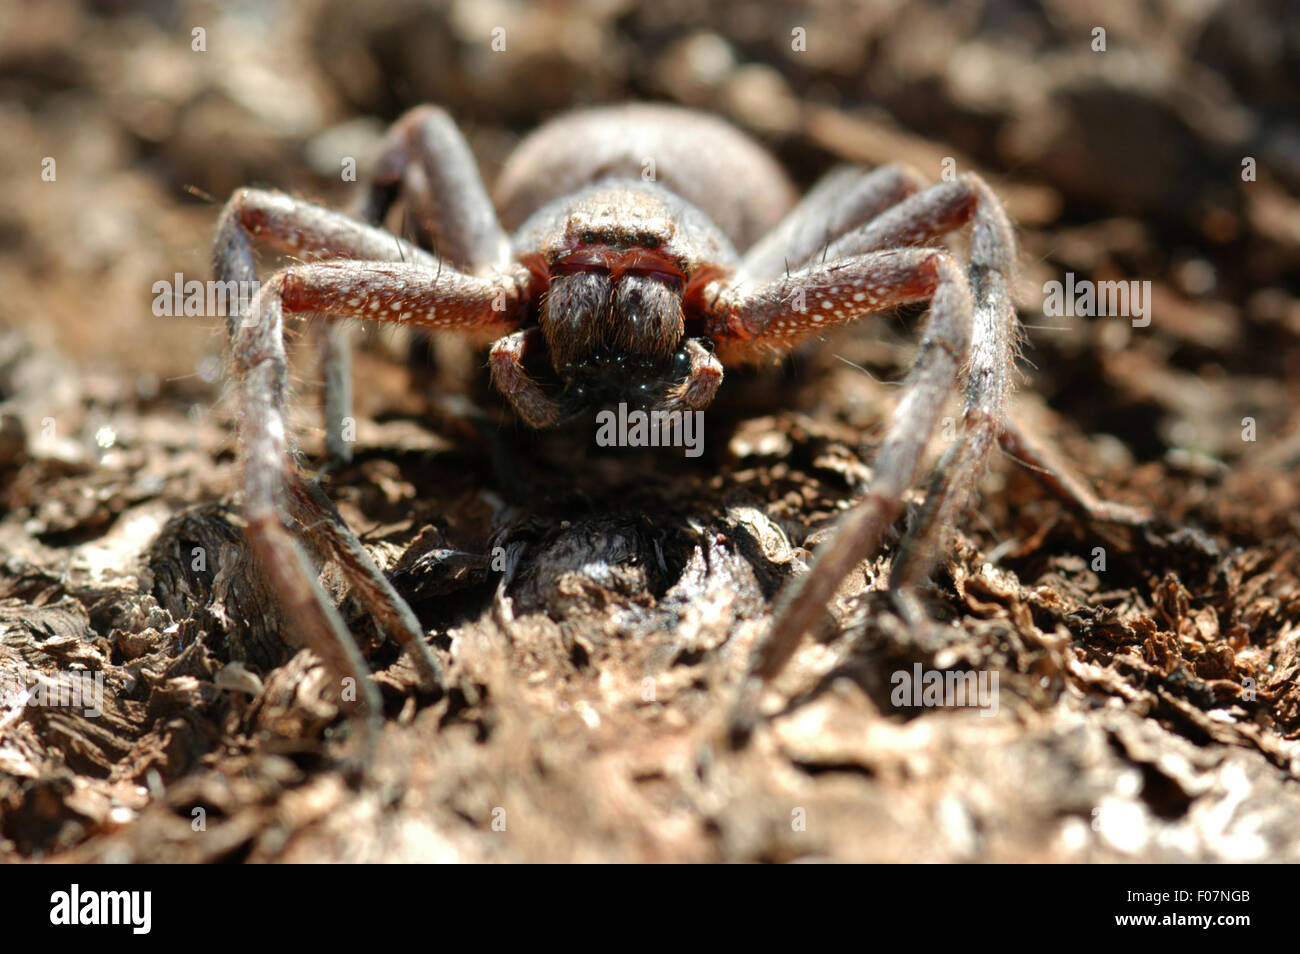 DETAILED SHOT OF A HUNTSMAN SPIDER (ISOPODA SP.) Stock Photo